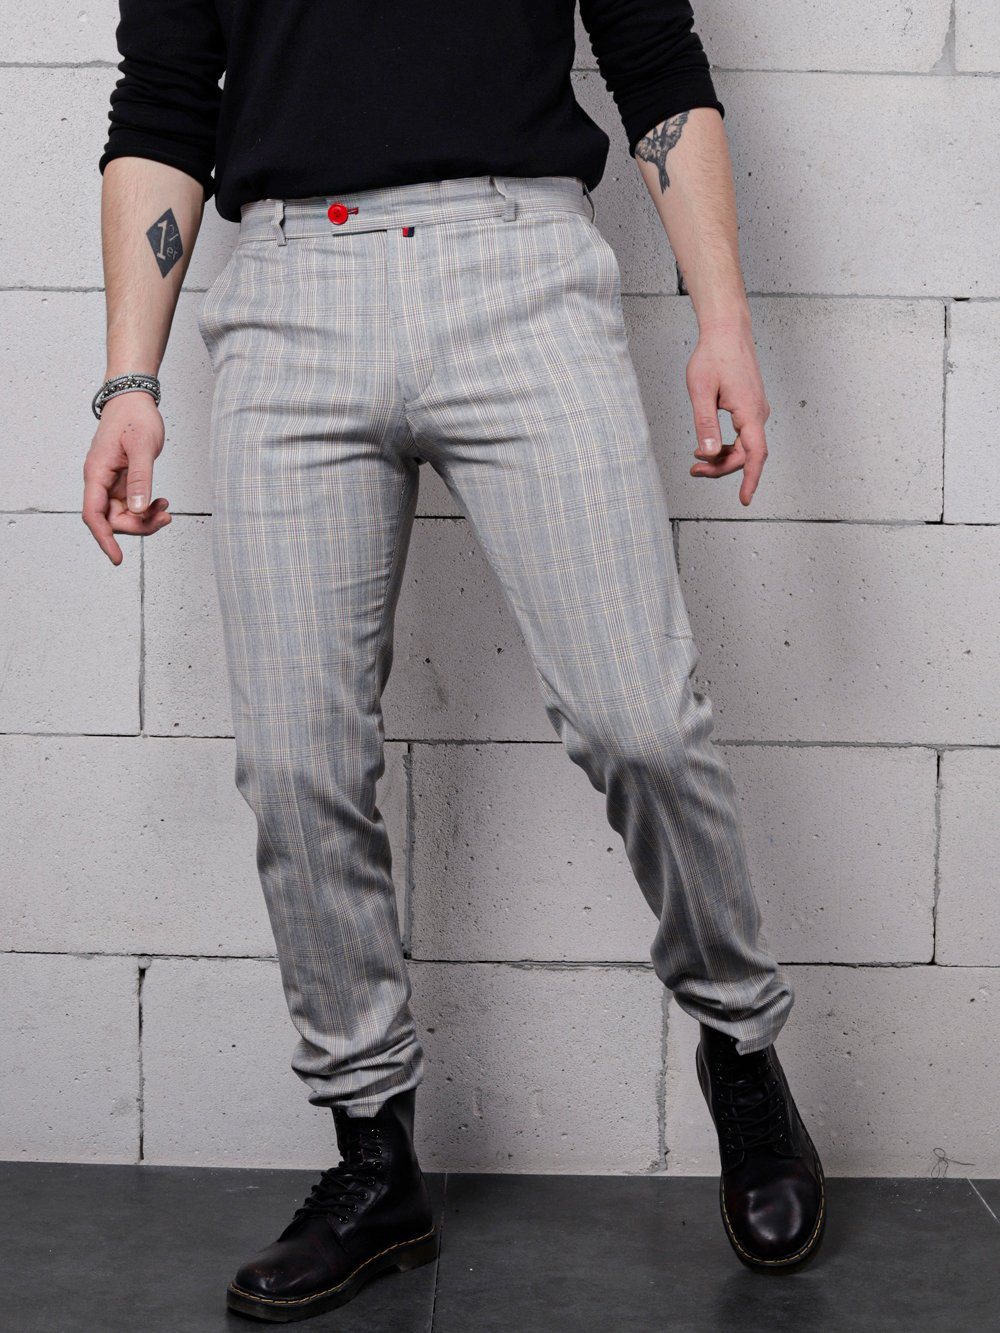 Lower body shot of a man wearing VANILLA LATTE Striped Pants by SERNES